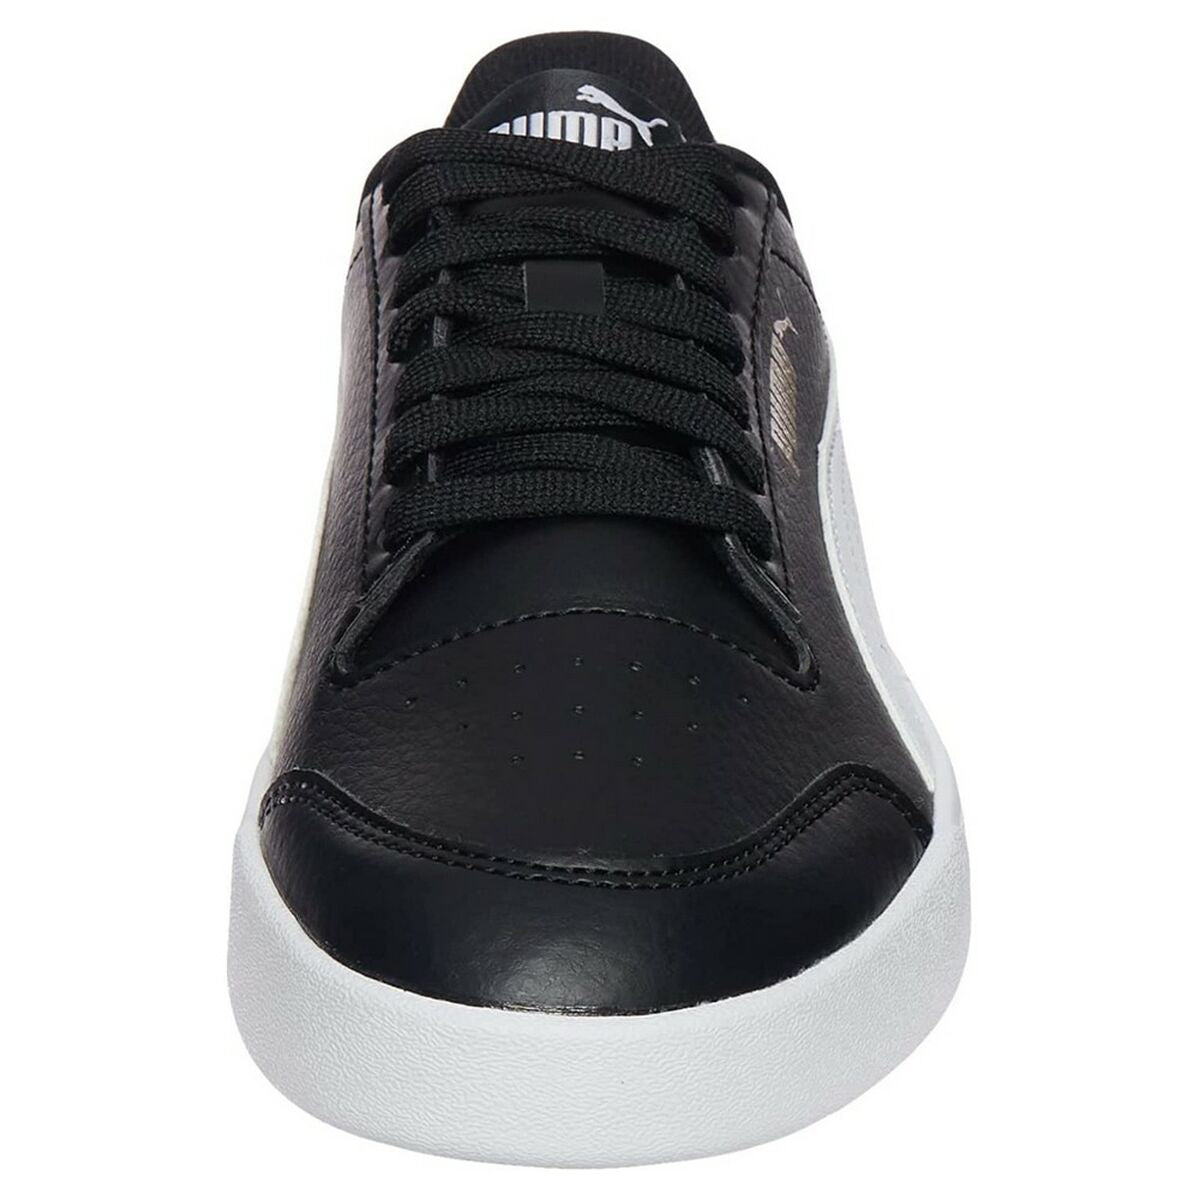 Sports Shoes for Kids Puma 375688 Black